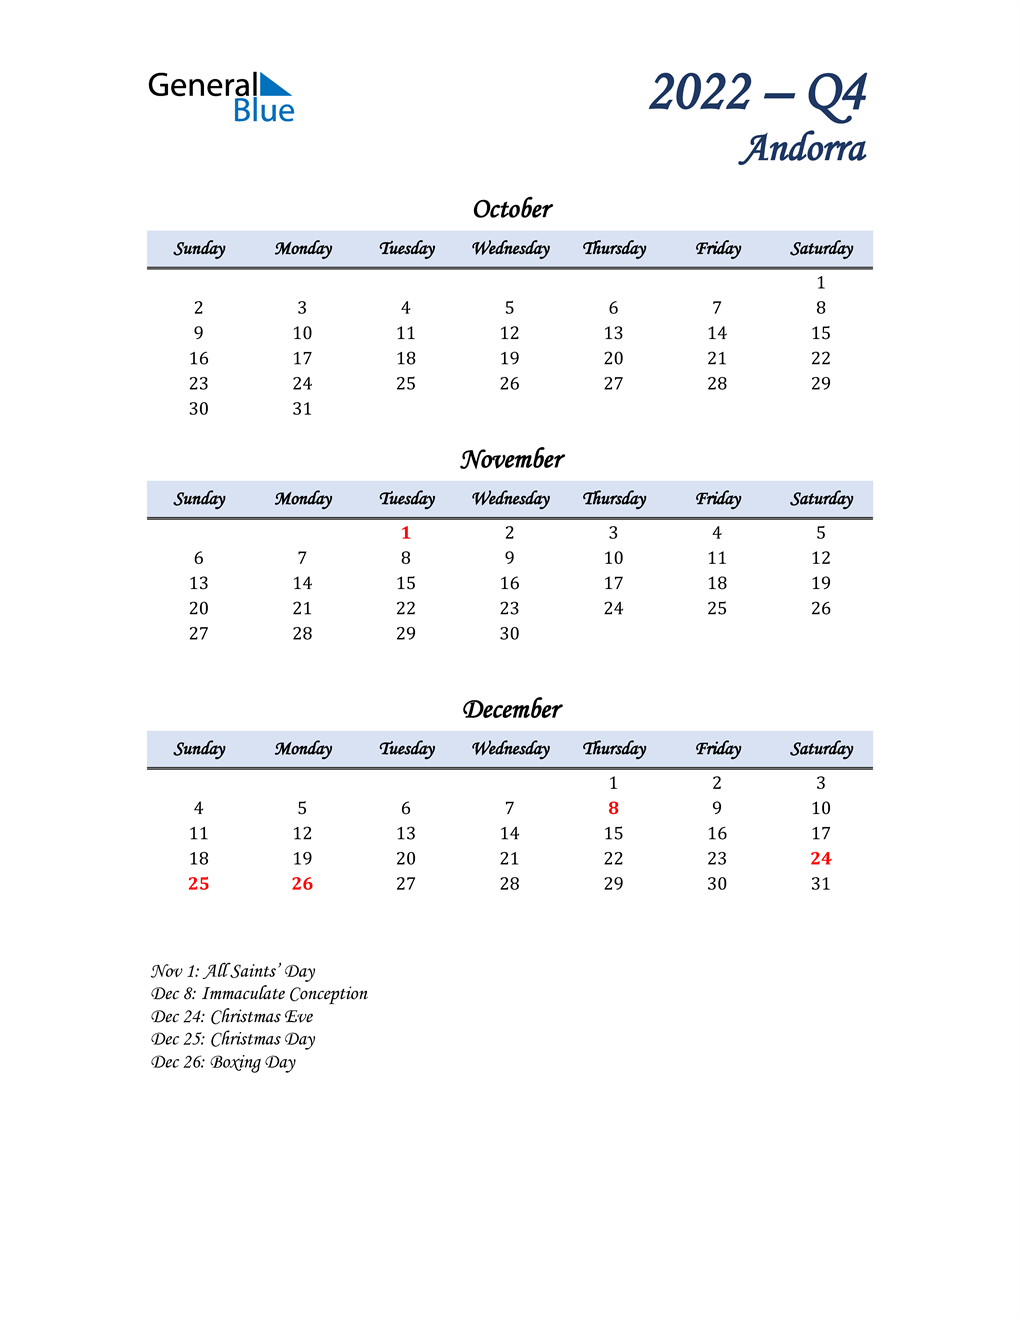  October, November, and December Calendar for Andorra